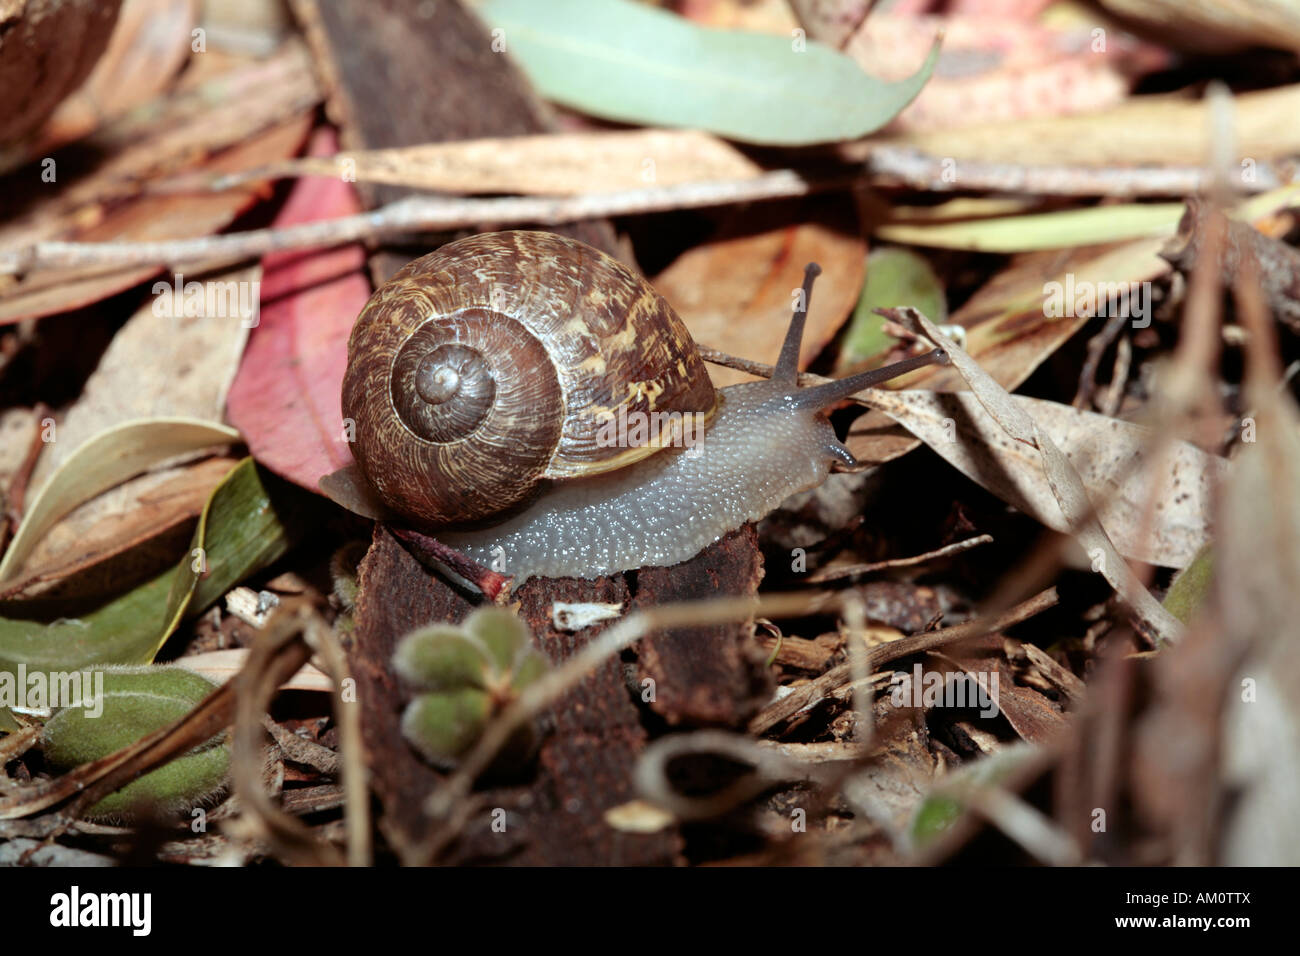 Brown Garden Snail / Gardensnail - Helix aspersa-Member of the Phylum Mollusca Class Gastropoda and Order Stylommatophora Stock Photo